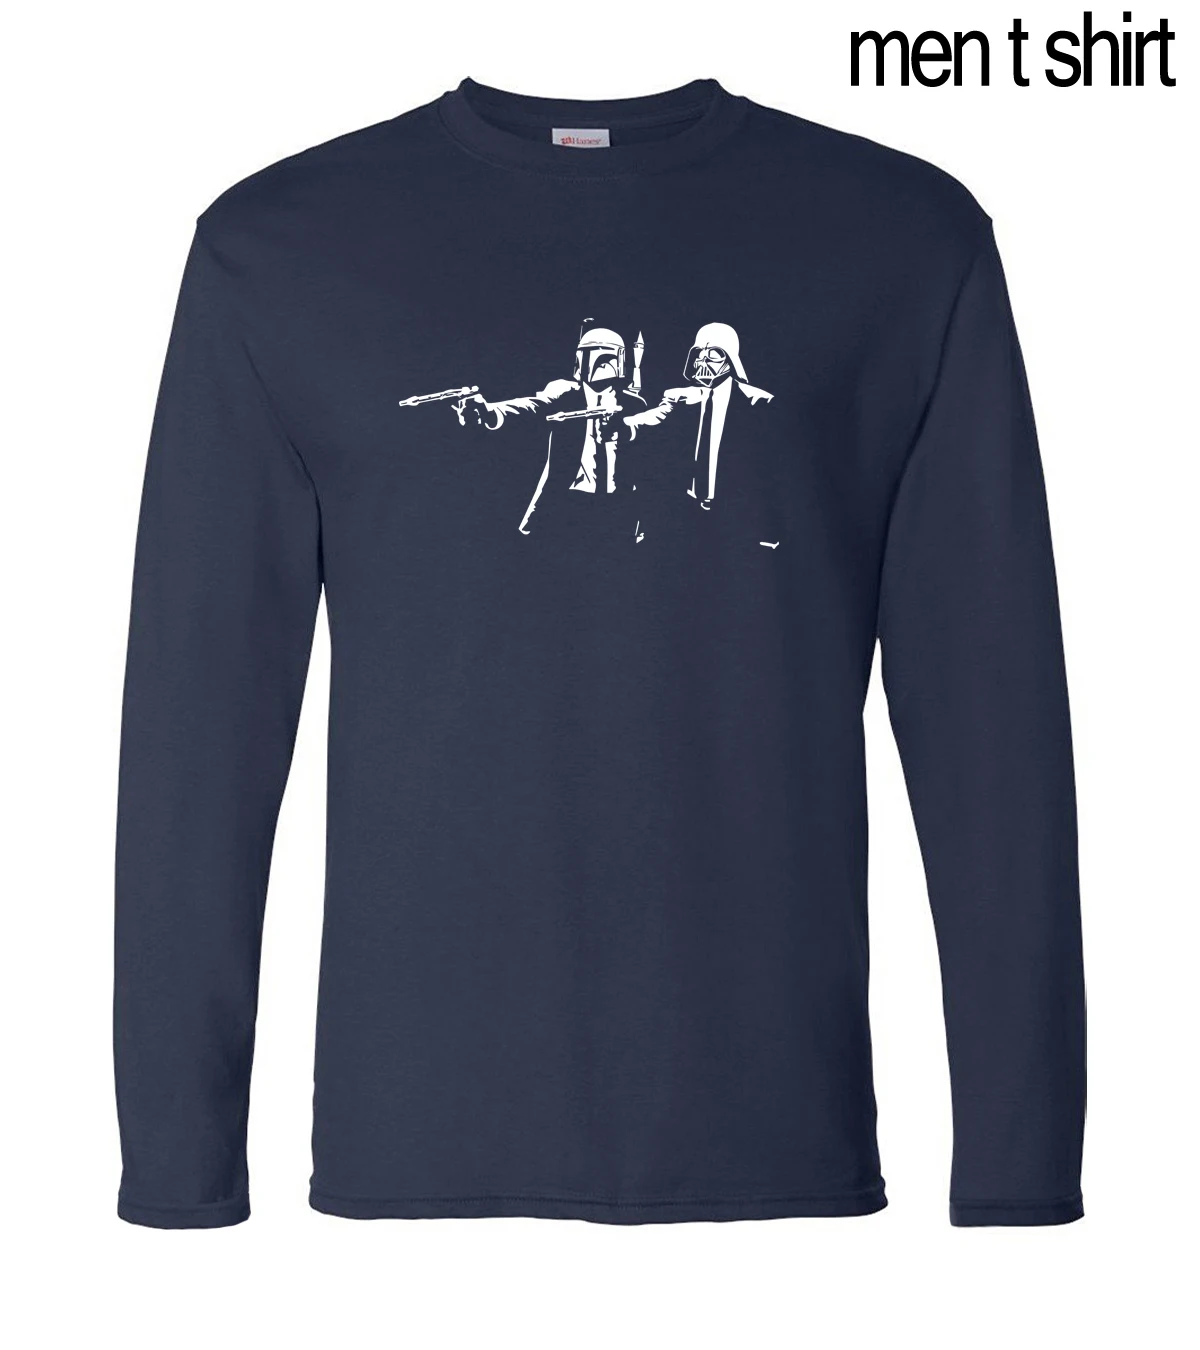 Banksy Star Wars Pulp fiction Мужская футболка Новинка Весна хлопок мужские футболки с длинным рукавом хип-хоп фитнес мужские футболки